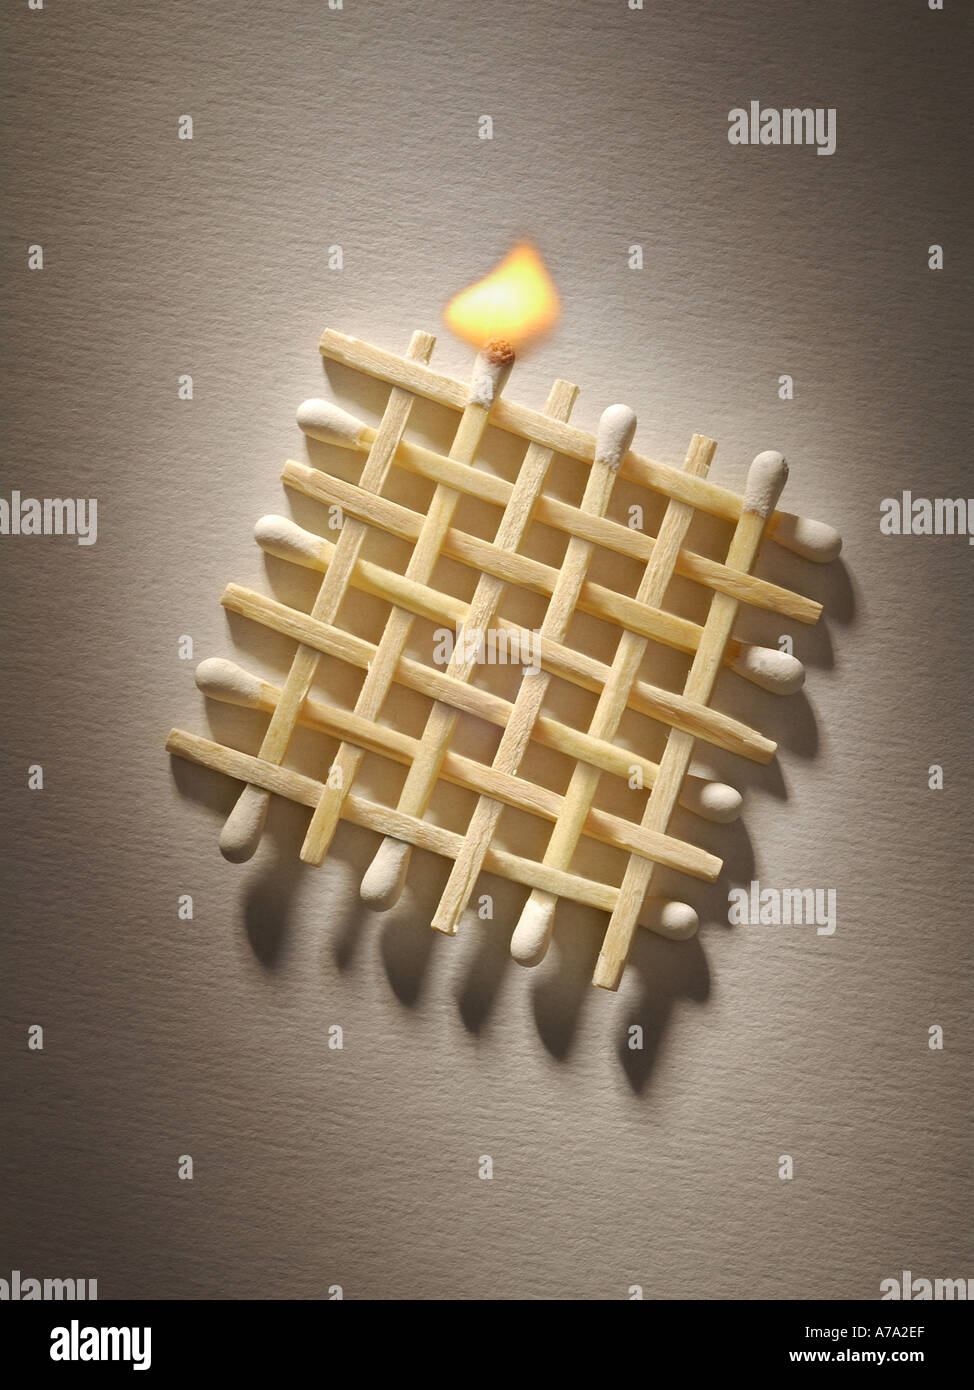 Woven matches digitally manipulated image Stock Photo